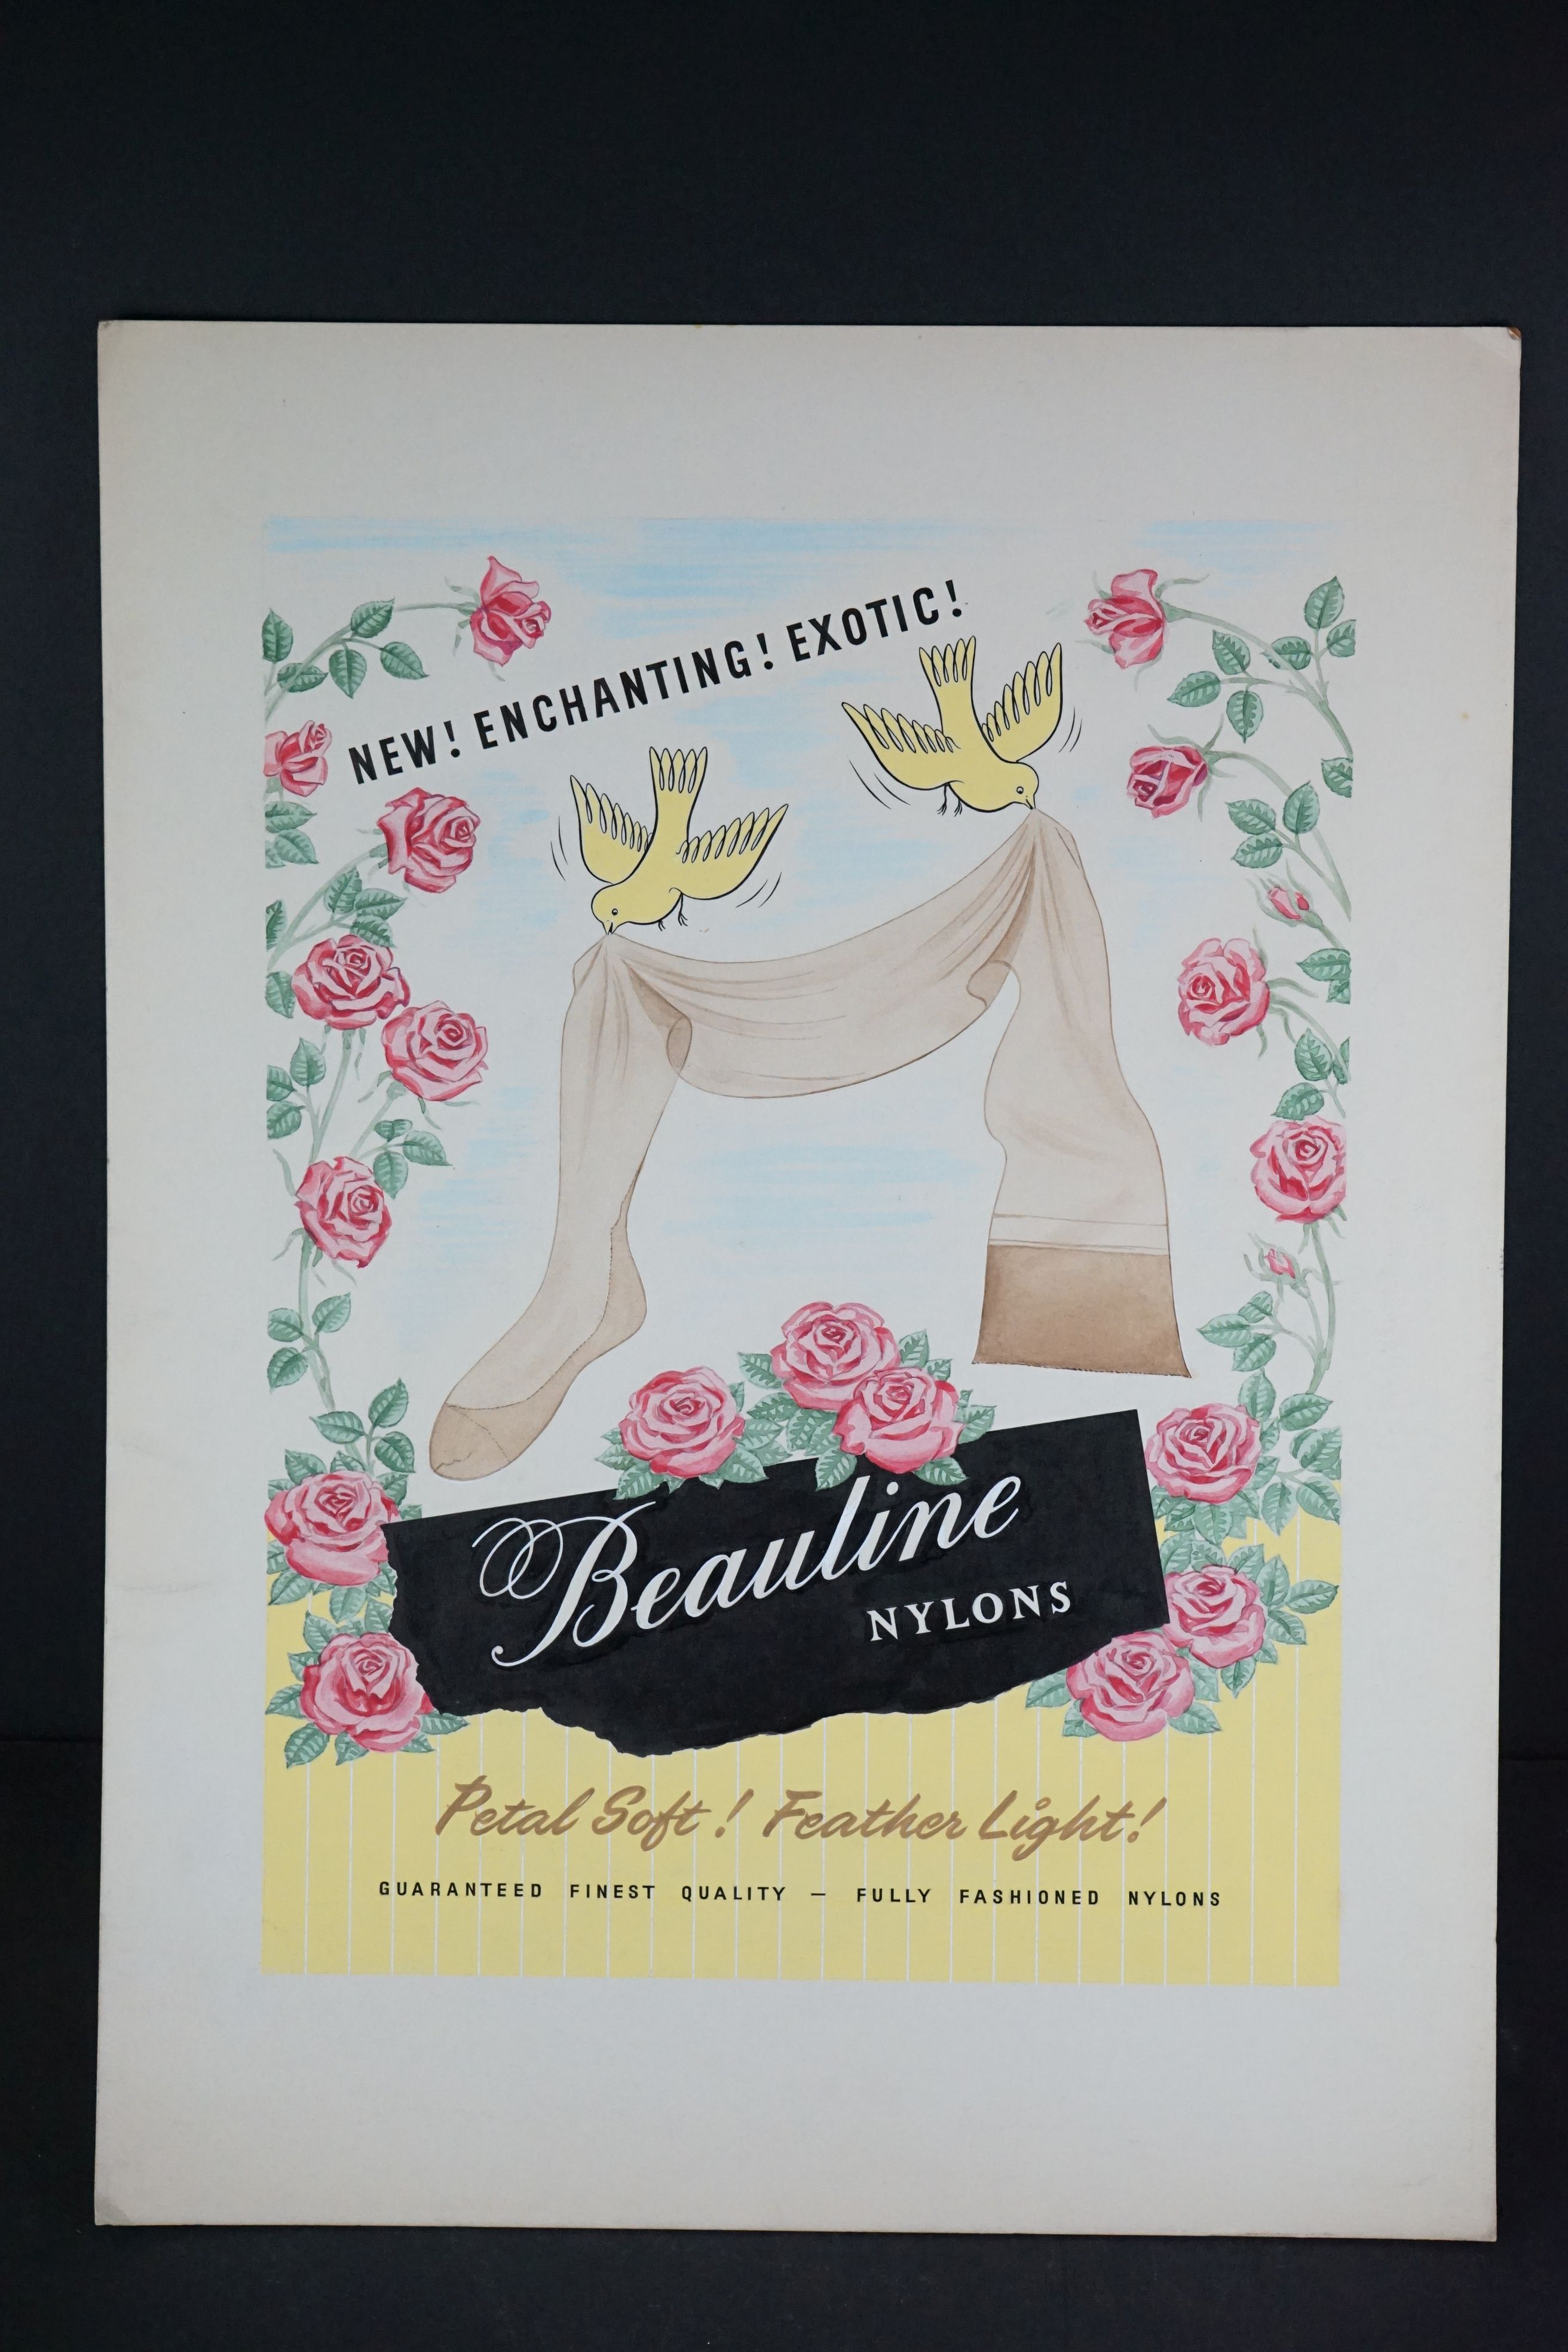 Advertising - Mid century Original Artwork for Beauline Nylons Stocking, image 41cm x 30cm